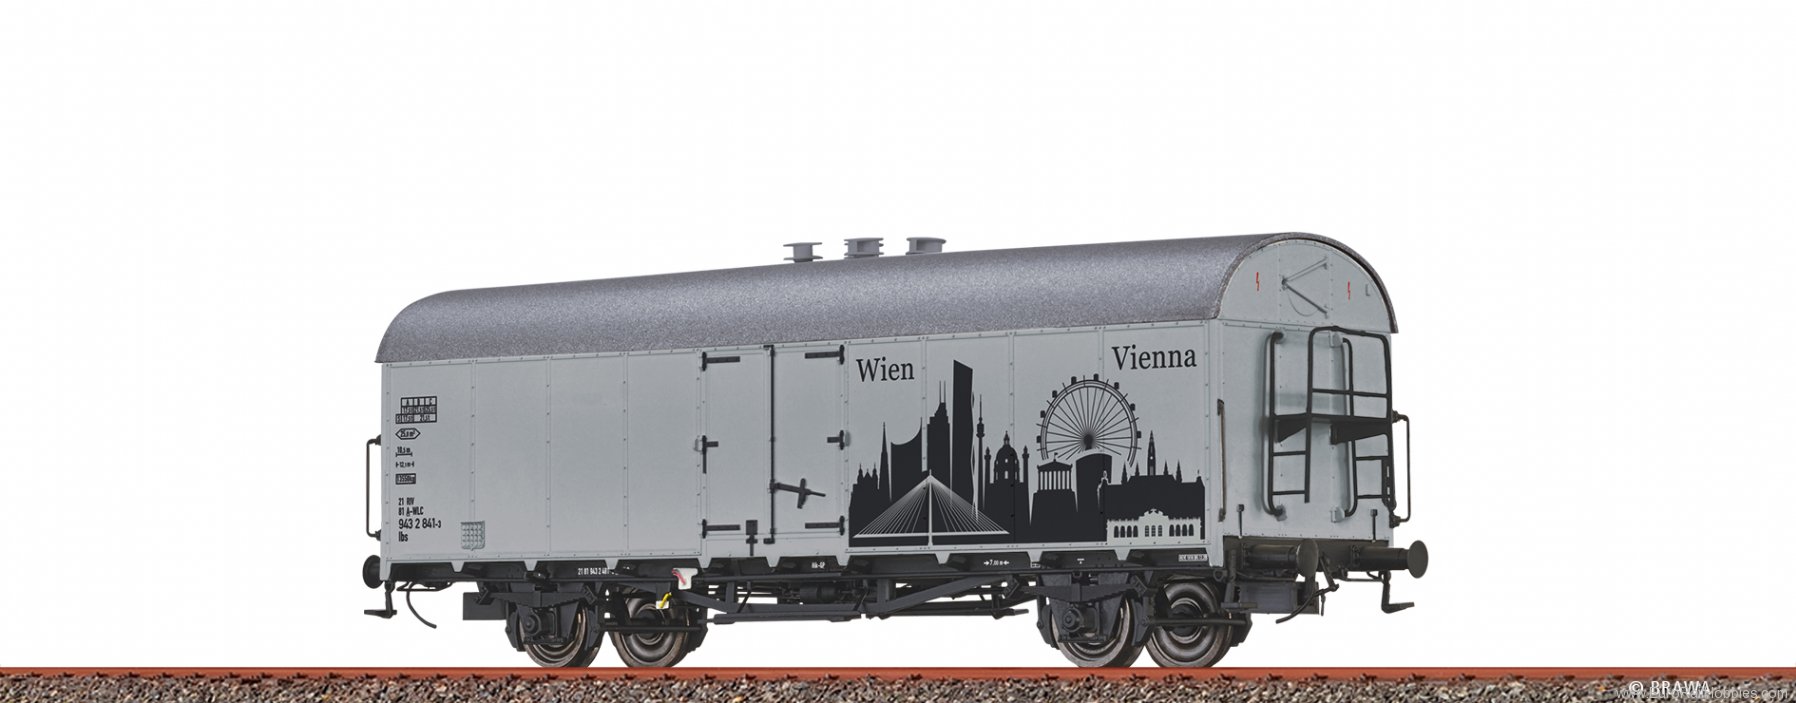 Brawa 50989 Covered Freight Car Ibs Skyline Vienna